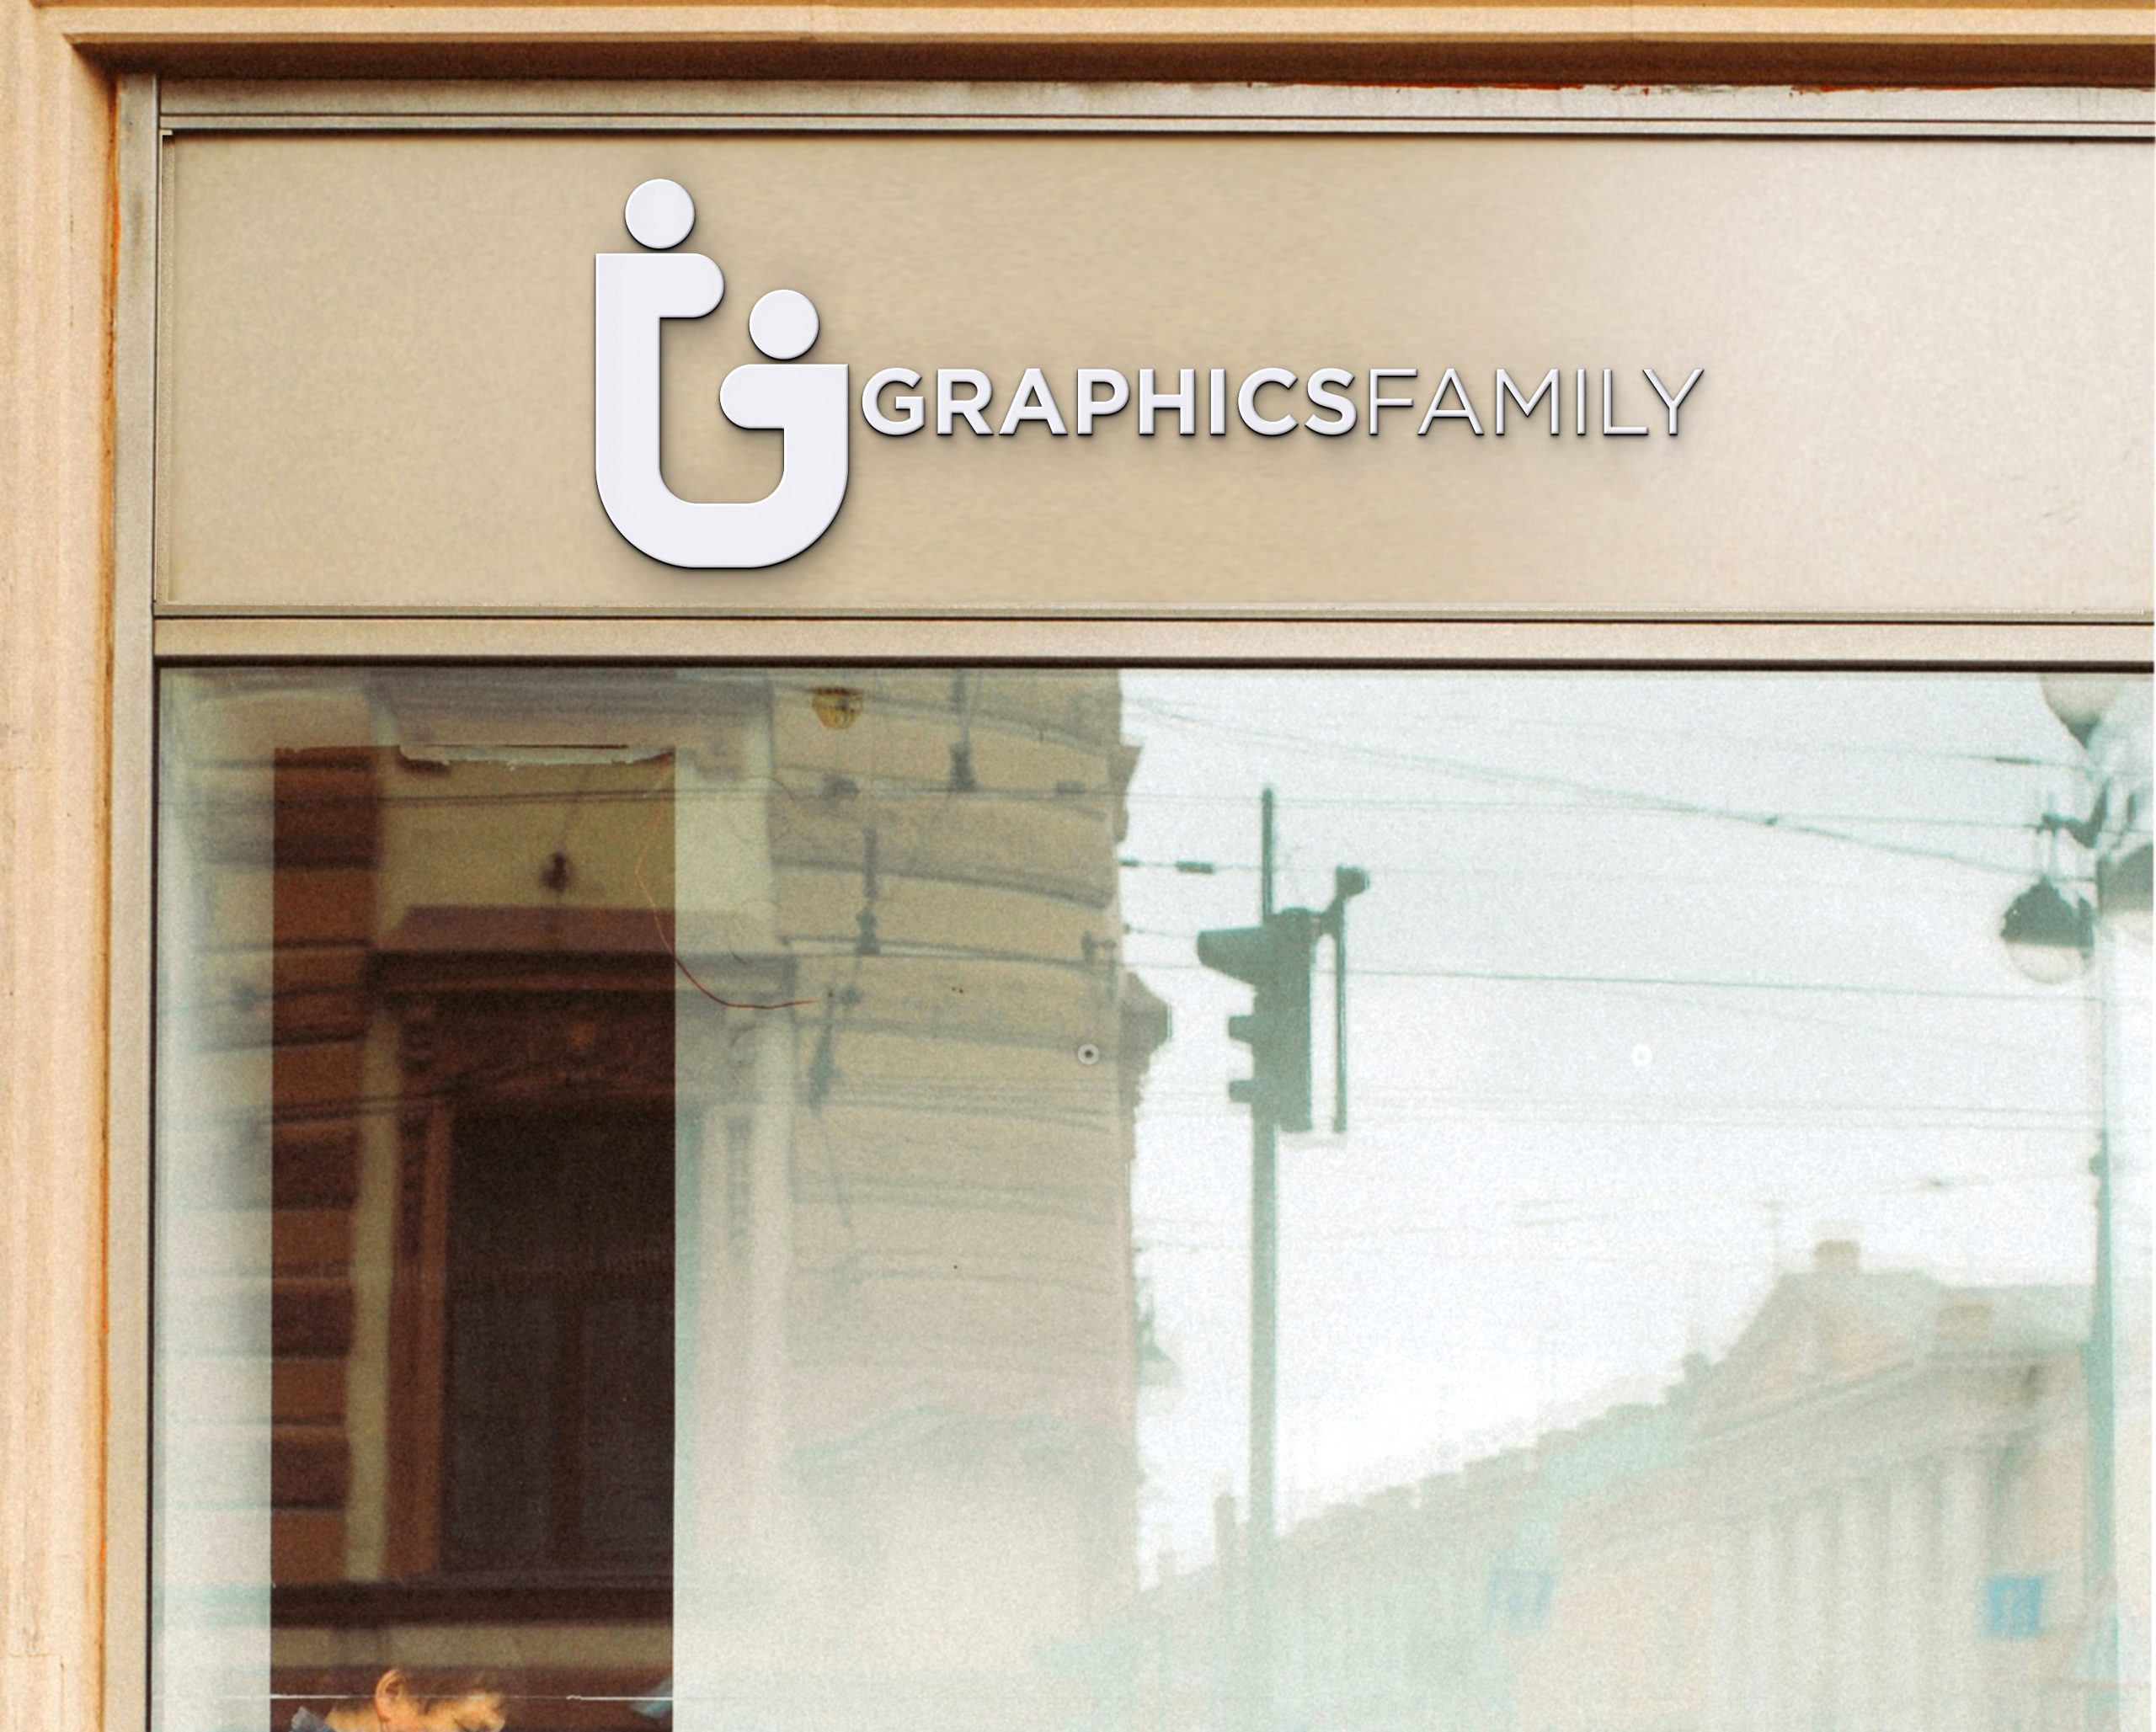 Logo Mockup on Realistic Glass Window Shop